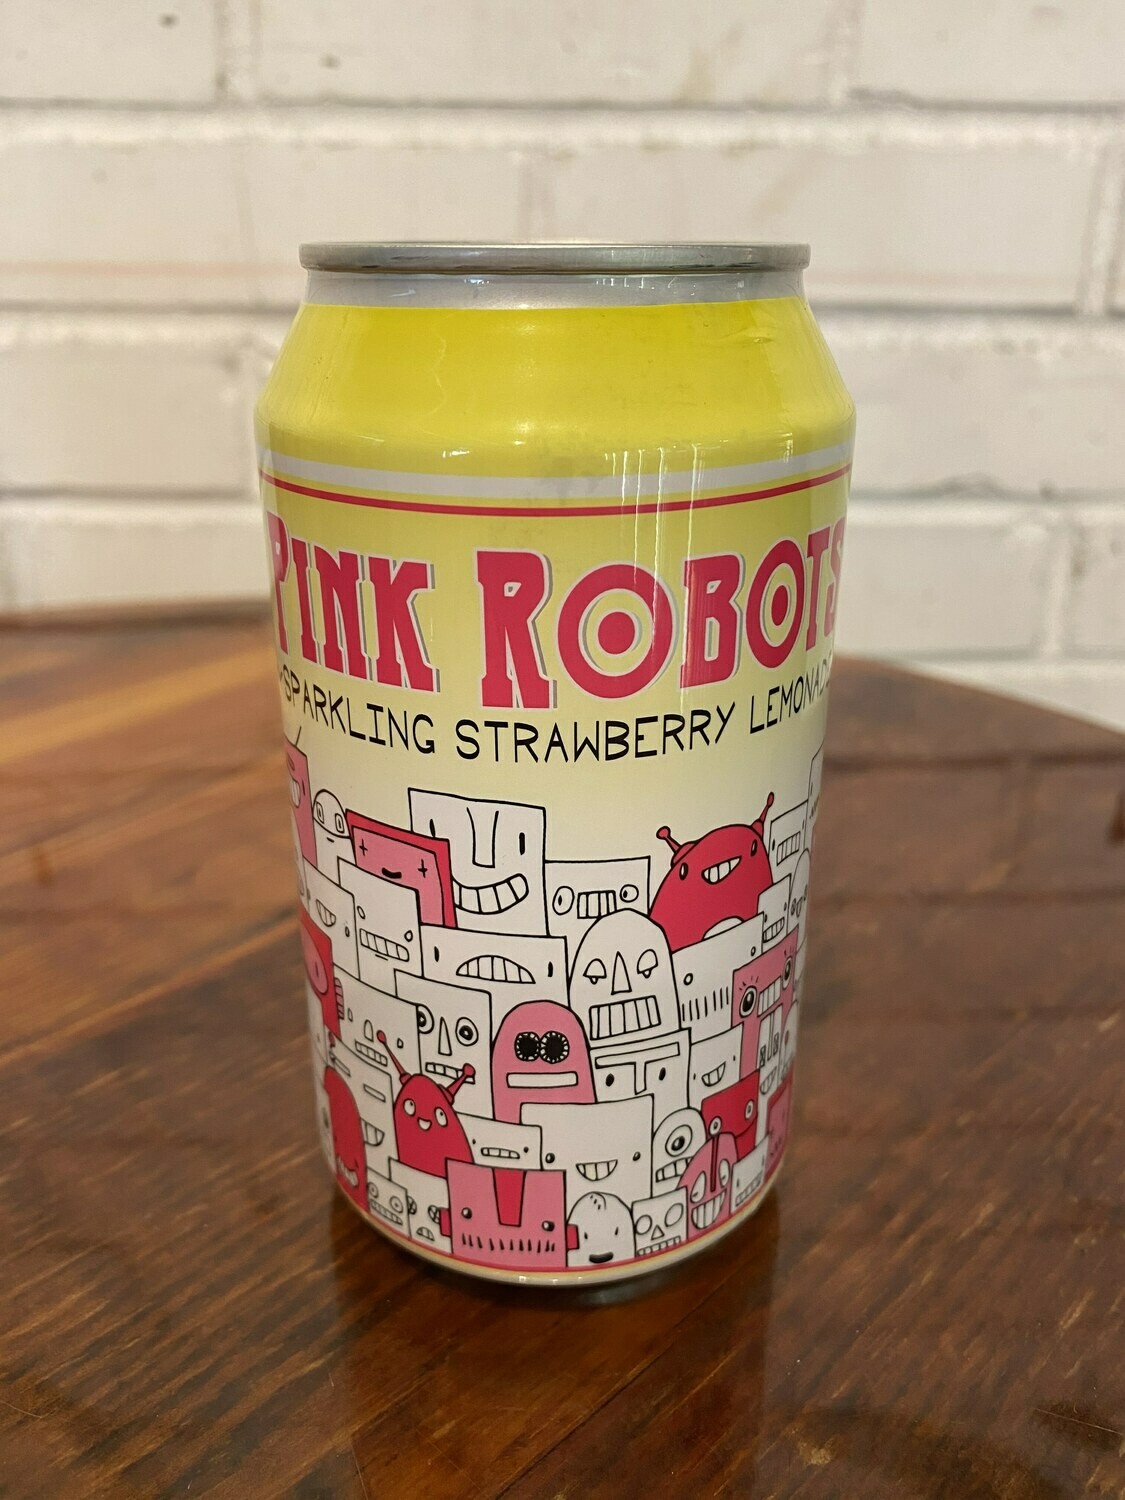 Devil's Foot Pink Robots Sparkling Strawberry Lemonade